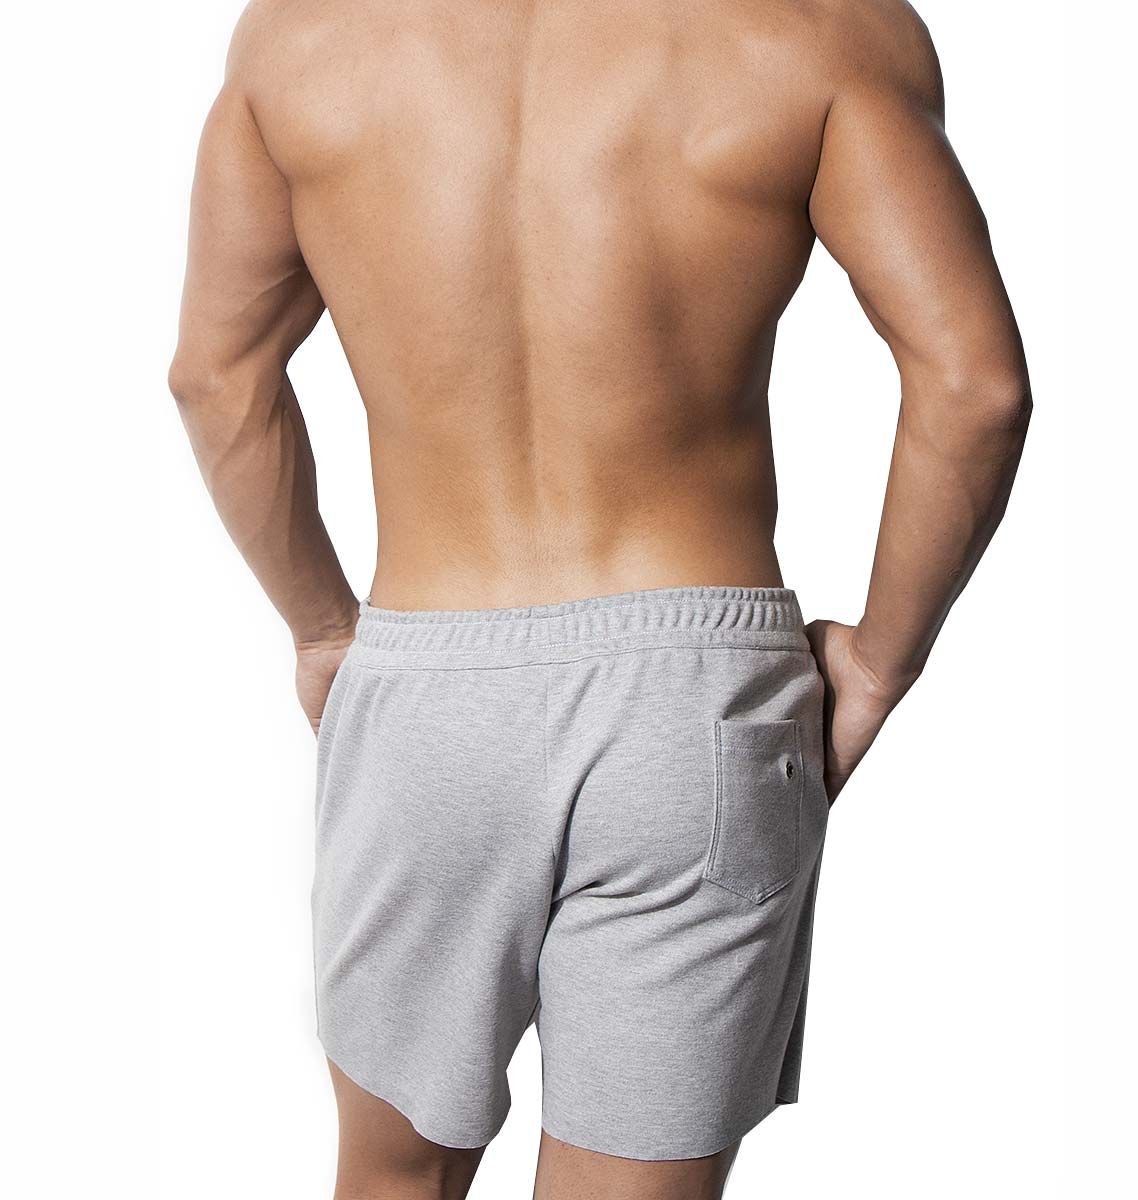 Alexander COBB Pantaloni sportivi corti Athletic Wear LONG GRAY, grigio